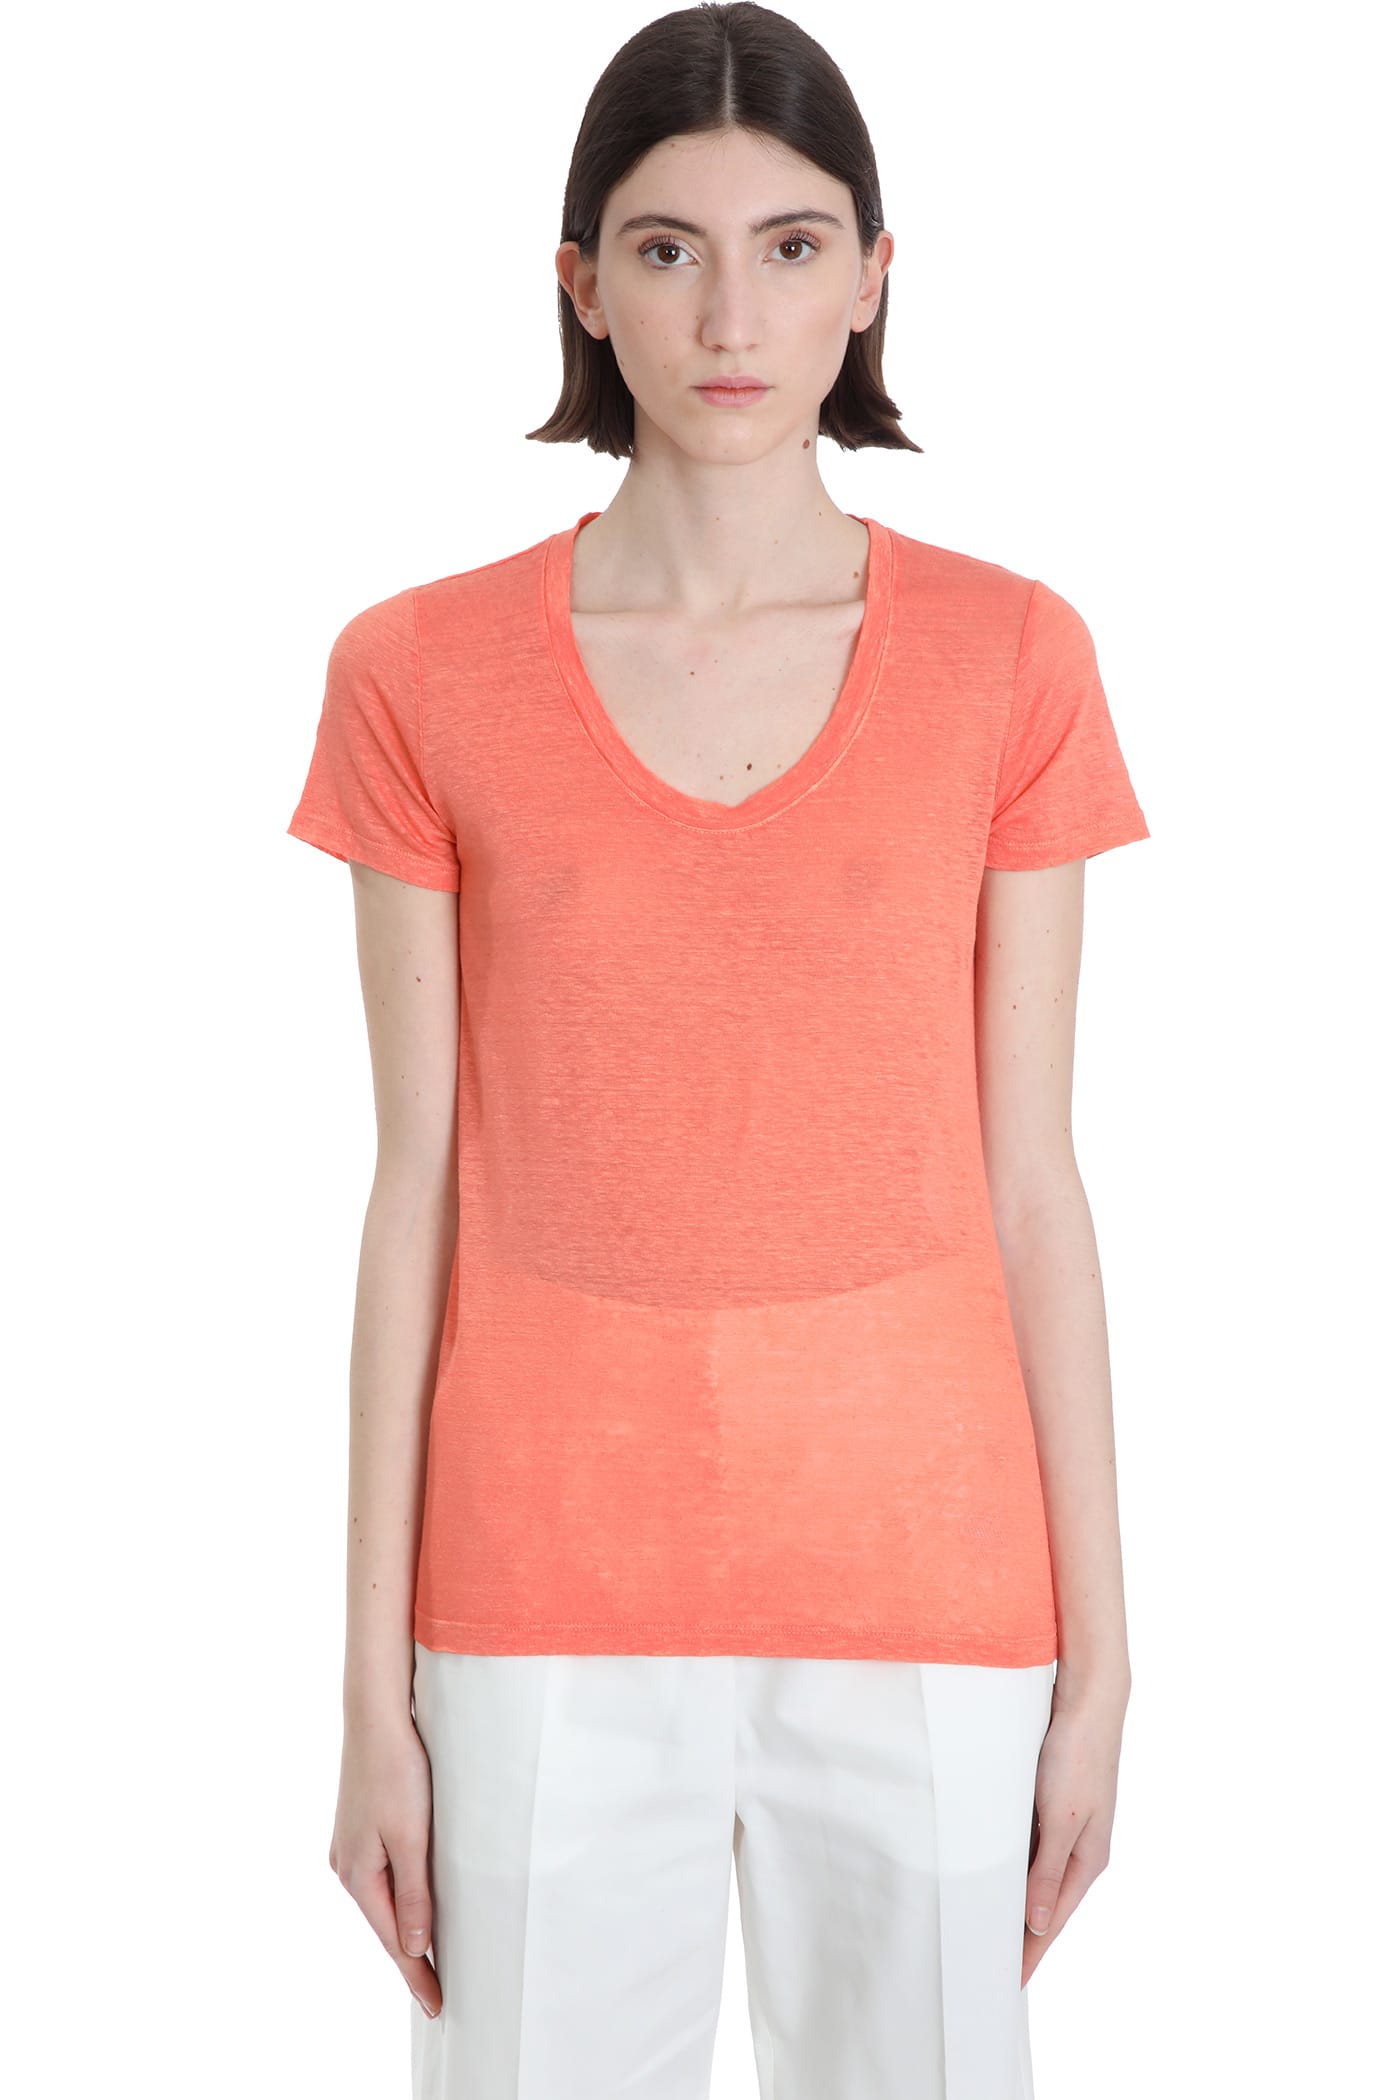 120 Lino - 120% lino t-shirt in orange linen